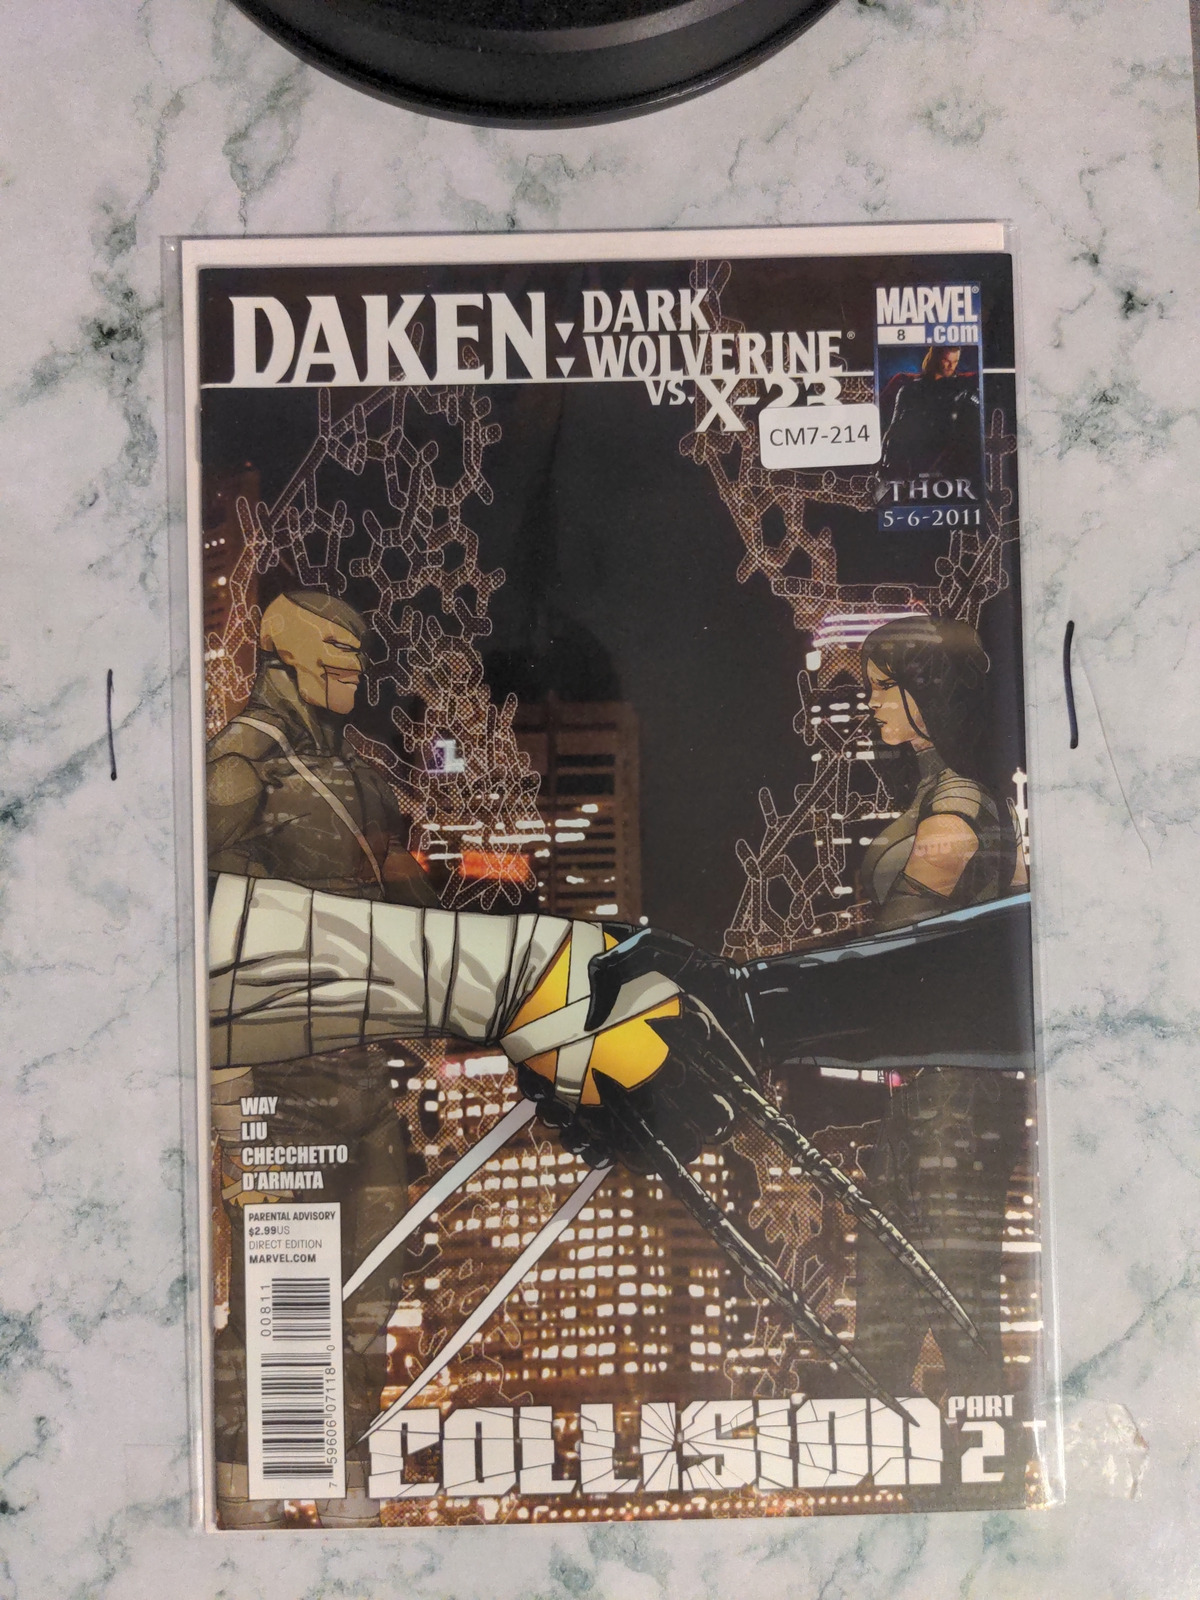 DAKEN: DARK WOLVERINE #8 8.0 MARVEL COMIC BOOK CM7-214